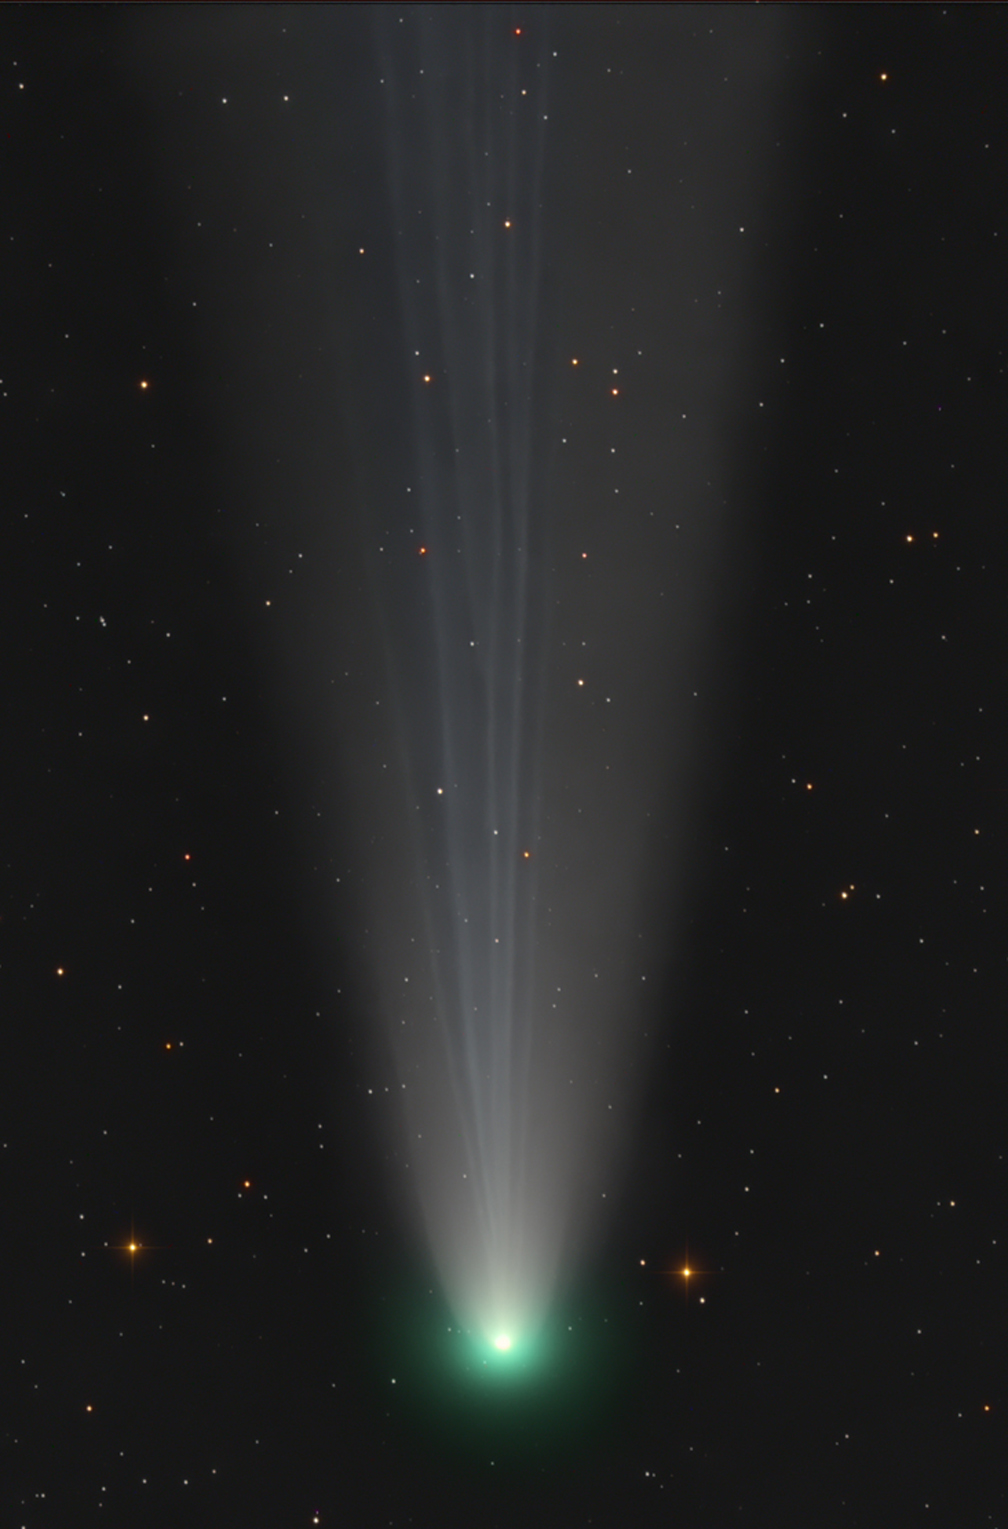 Amazing tail of comet Leonard